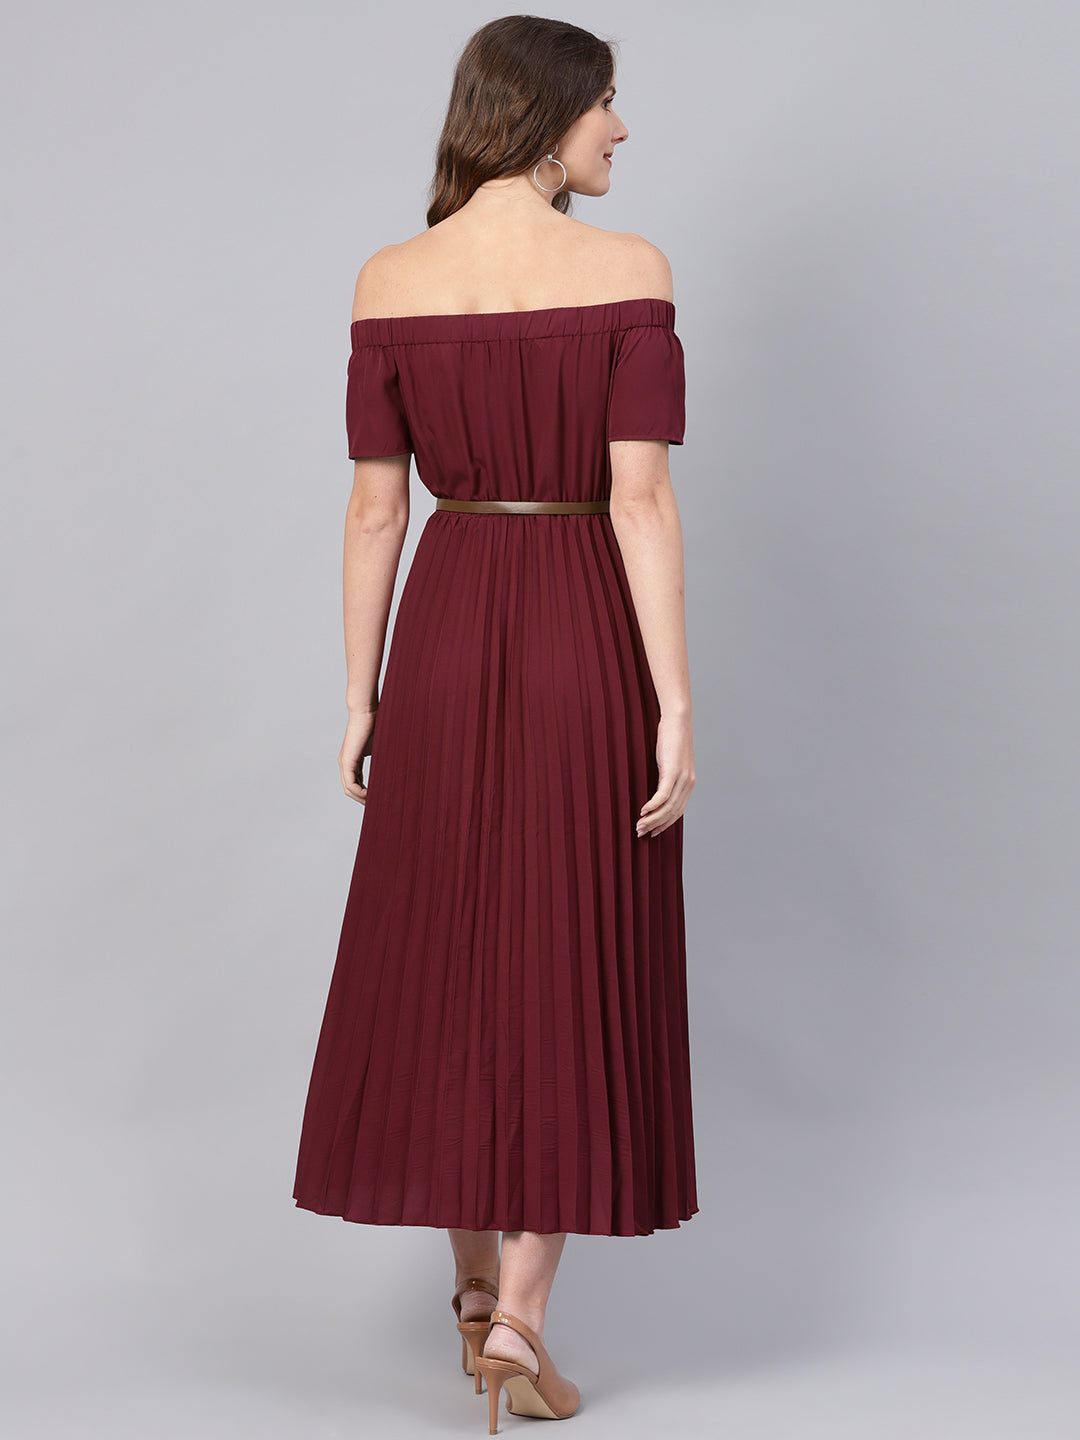 Burgundy Off Shoulder High Low Belted Pleated Dress